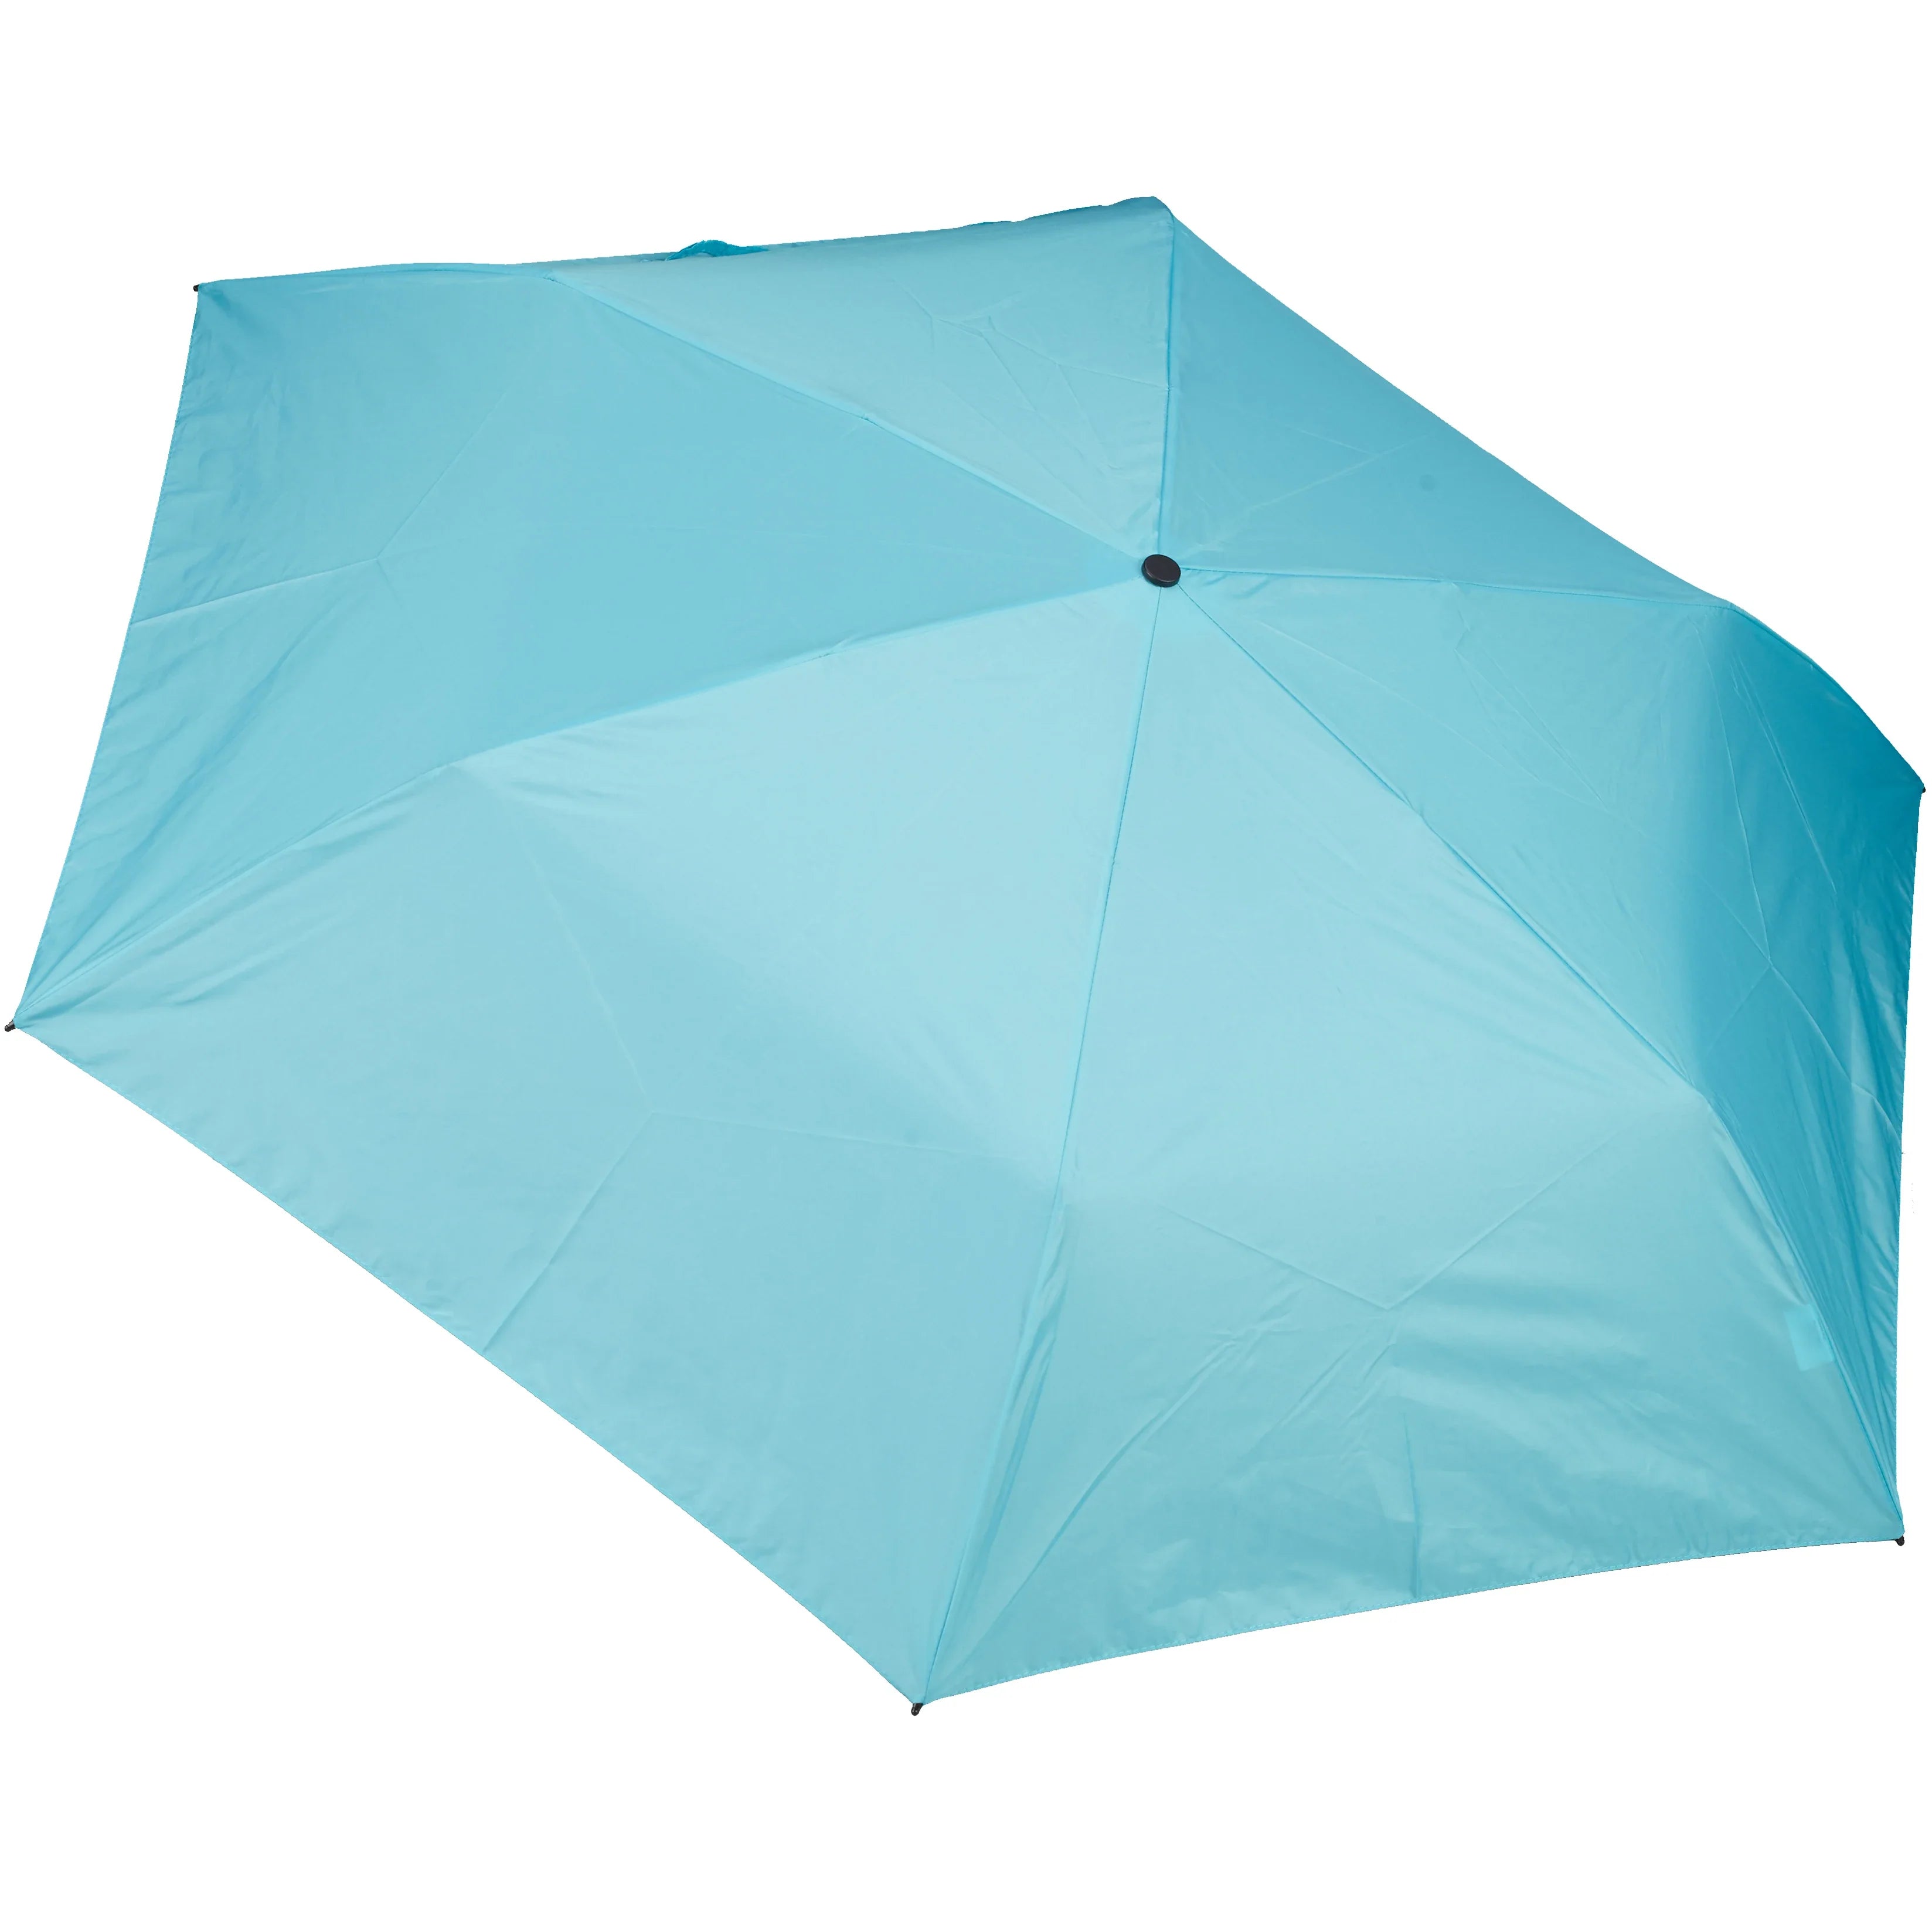 Doppler pocket umbrellas Zero99 pocket umbrella 21 cm - harmonic beige